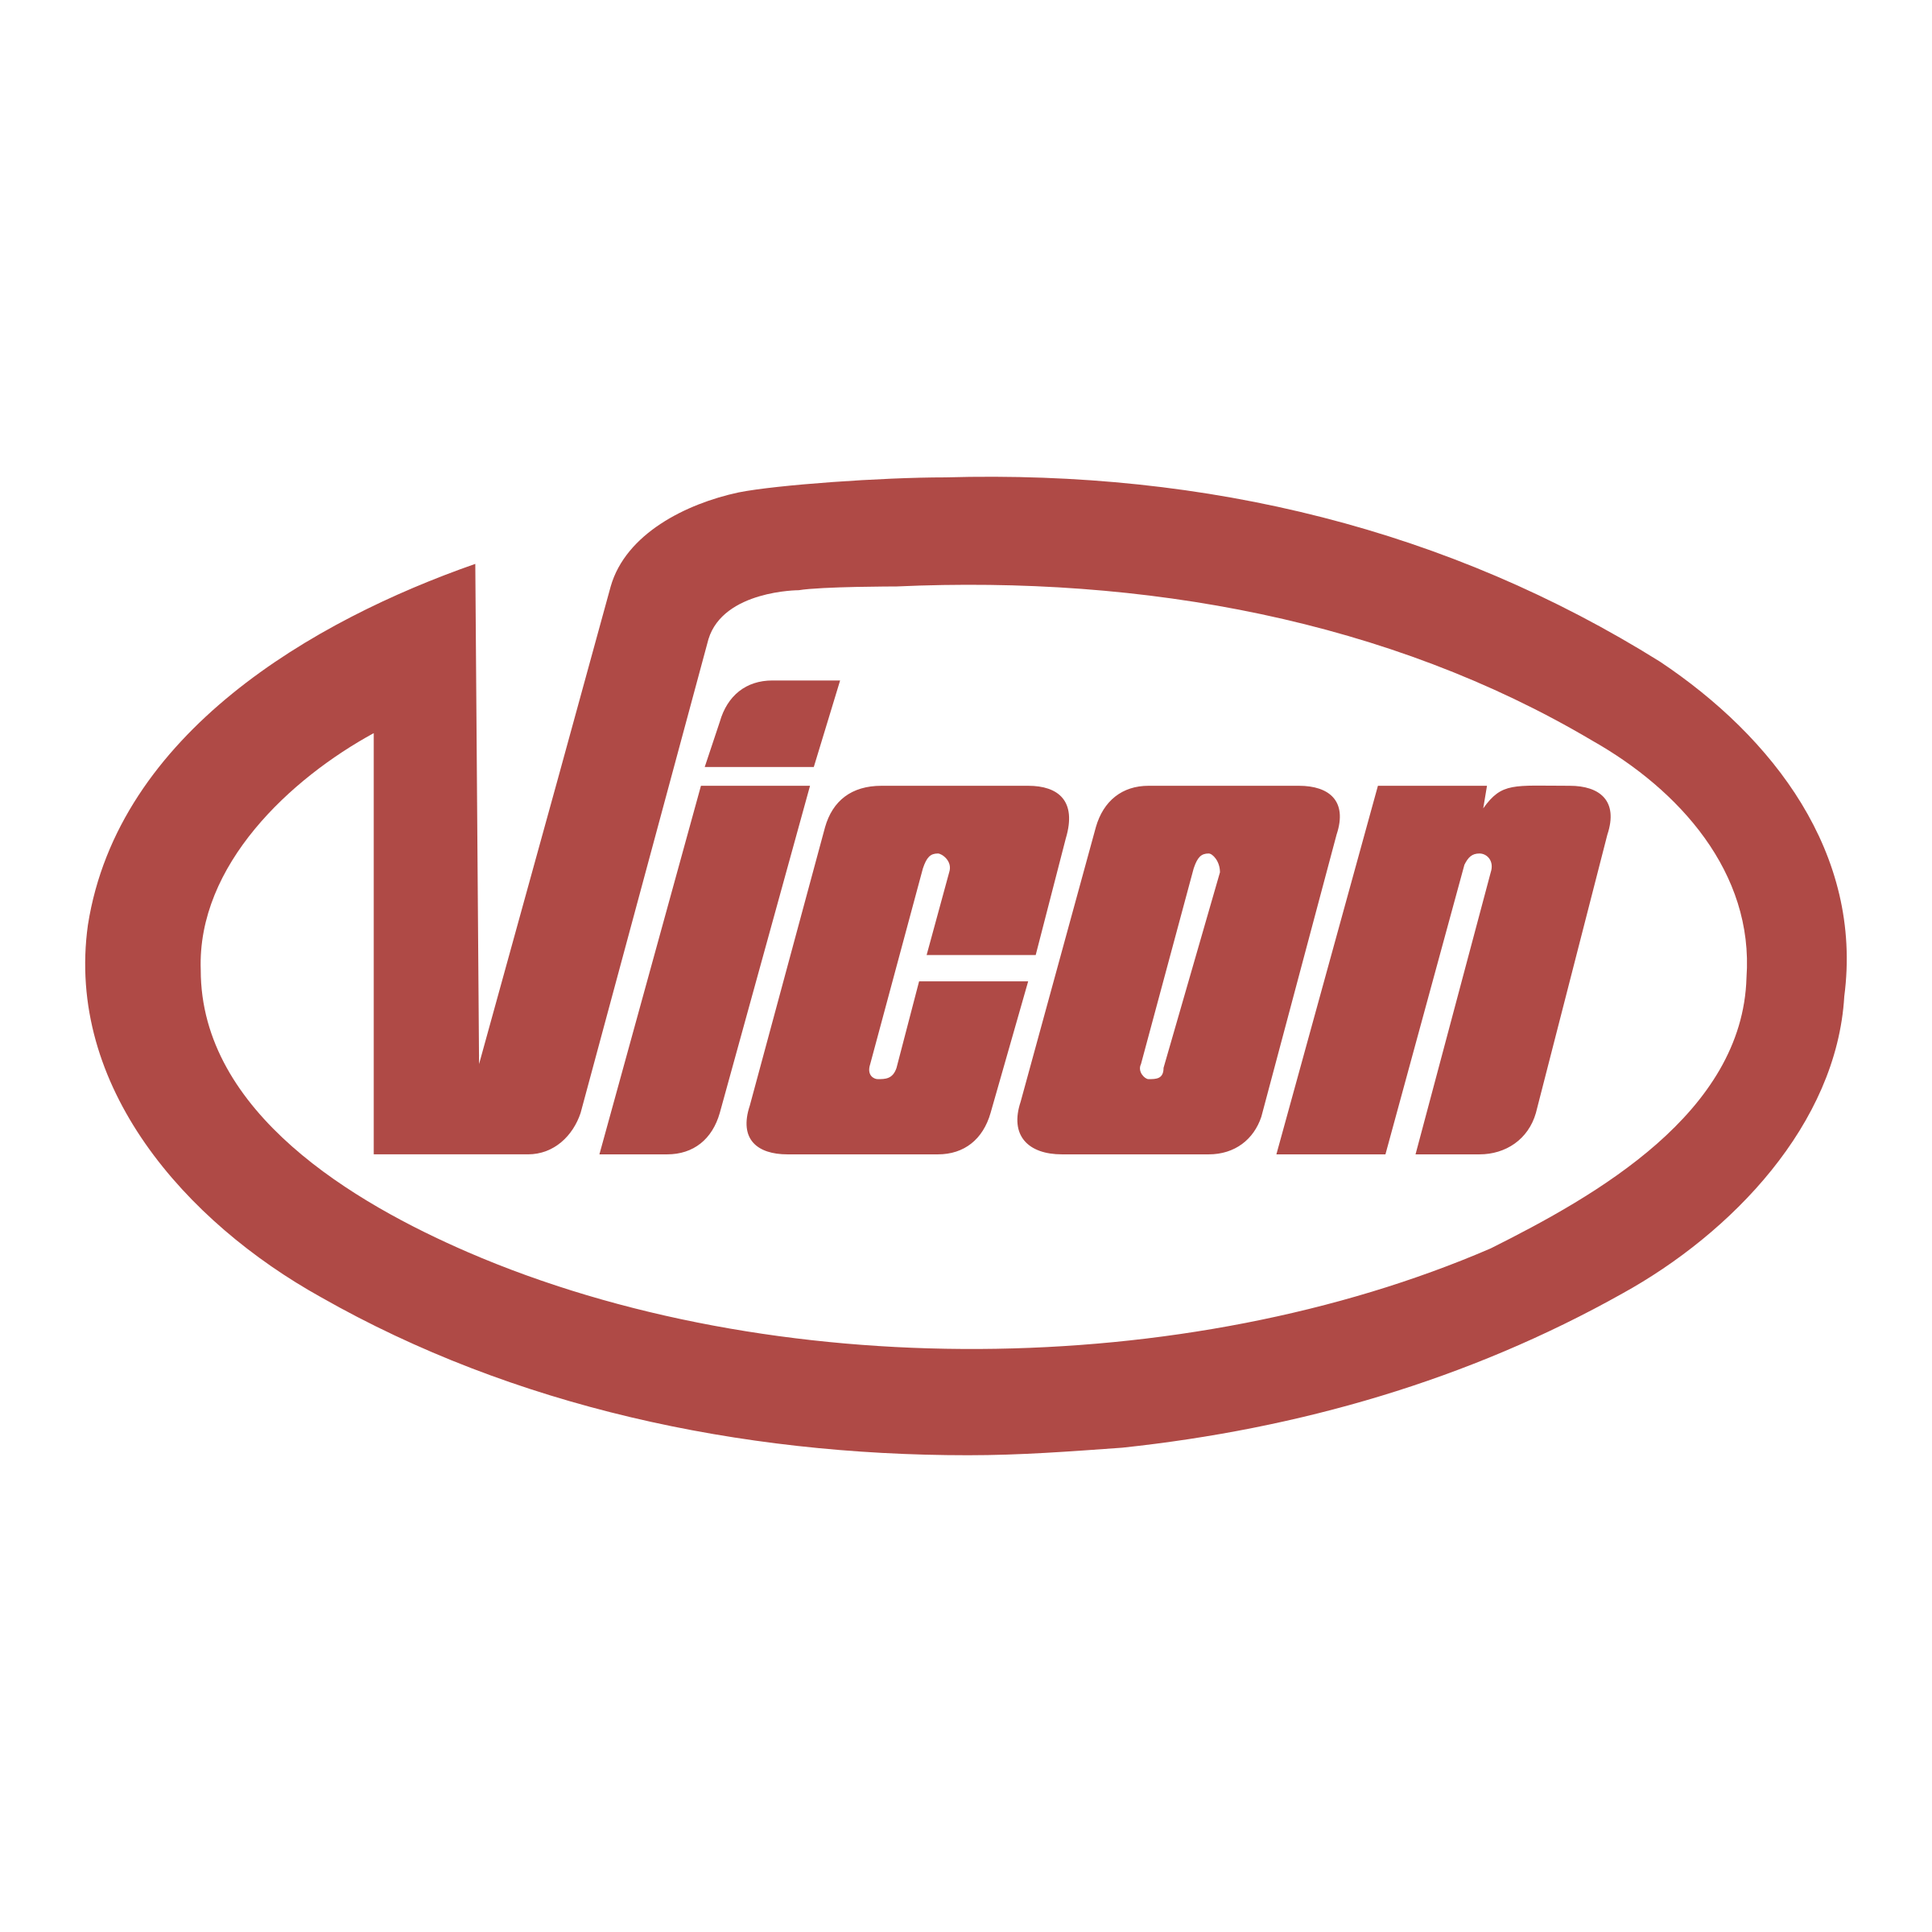 Ecco Logo PNG Transparent & SVG Vector - Freebie Supply